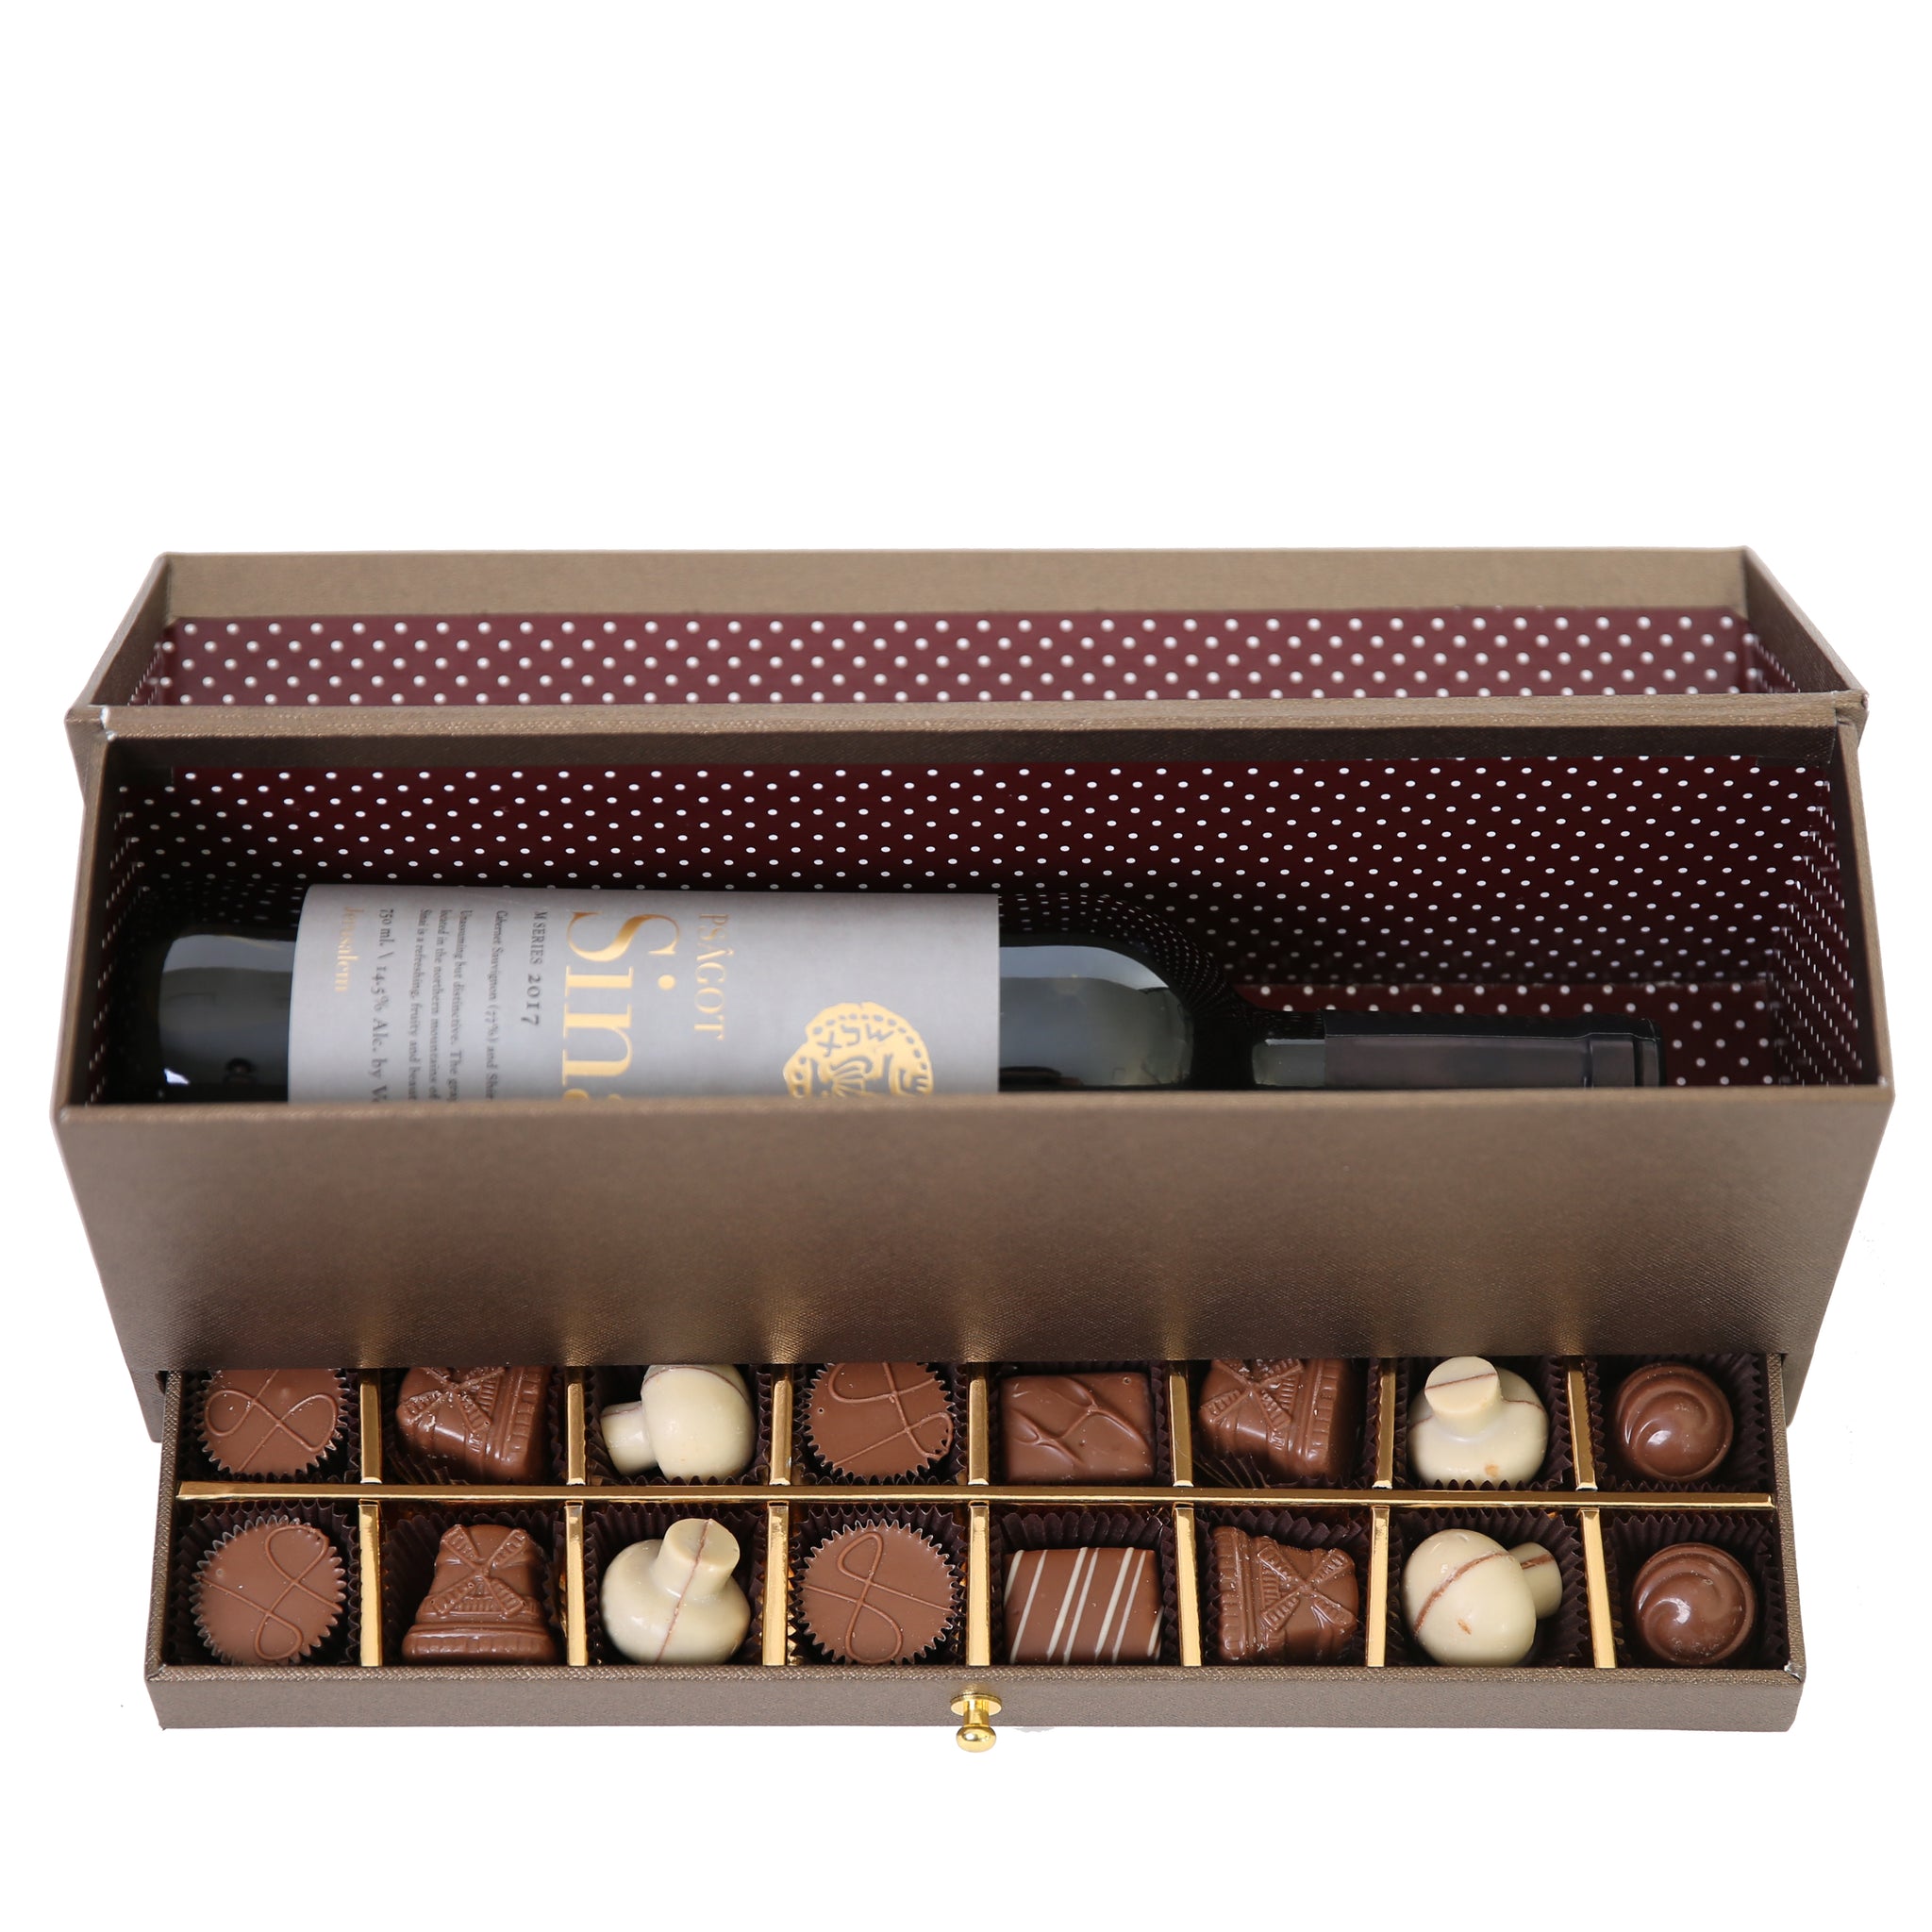 Cardboard Wine Box With Chocolate Drawer My Chocolate Place